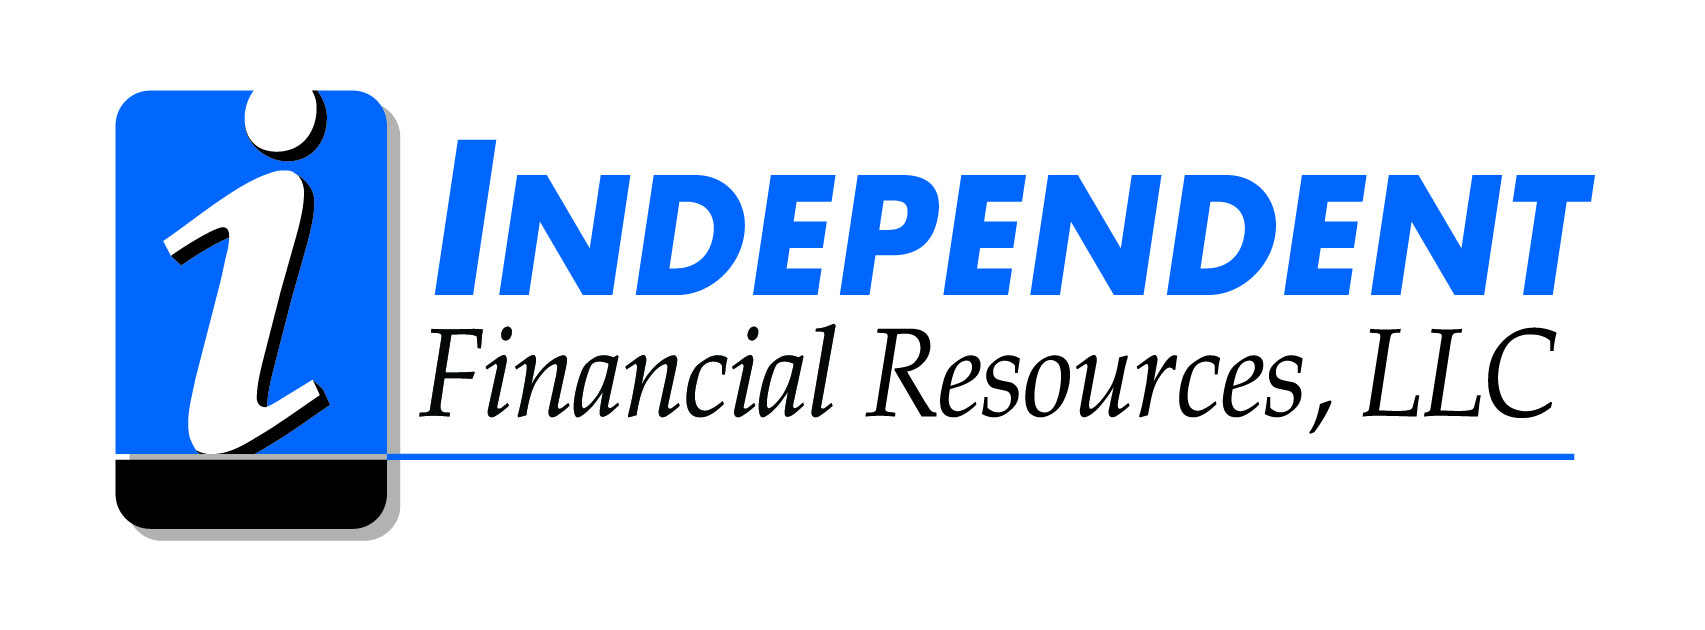 INDEPENDENT FINANCIAL RESOURCES, LLC